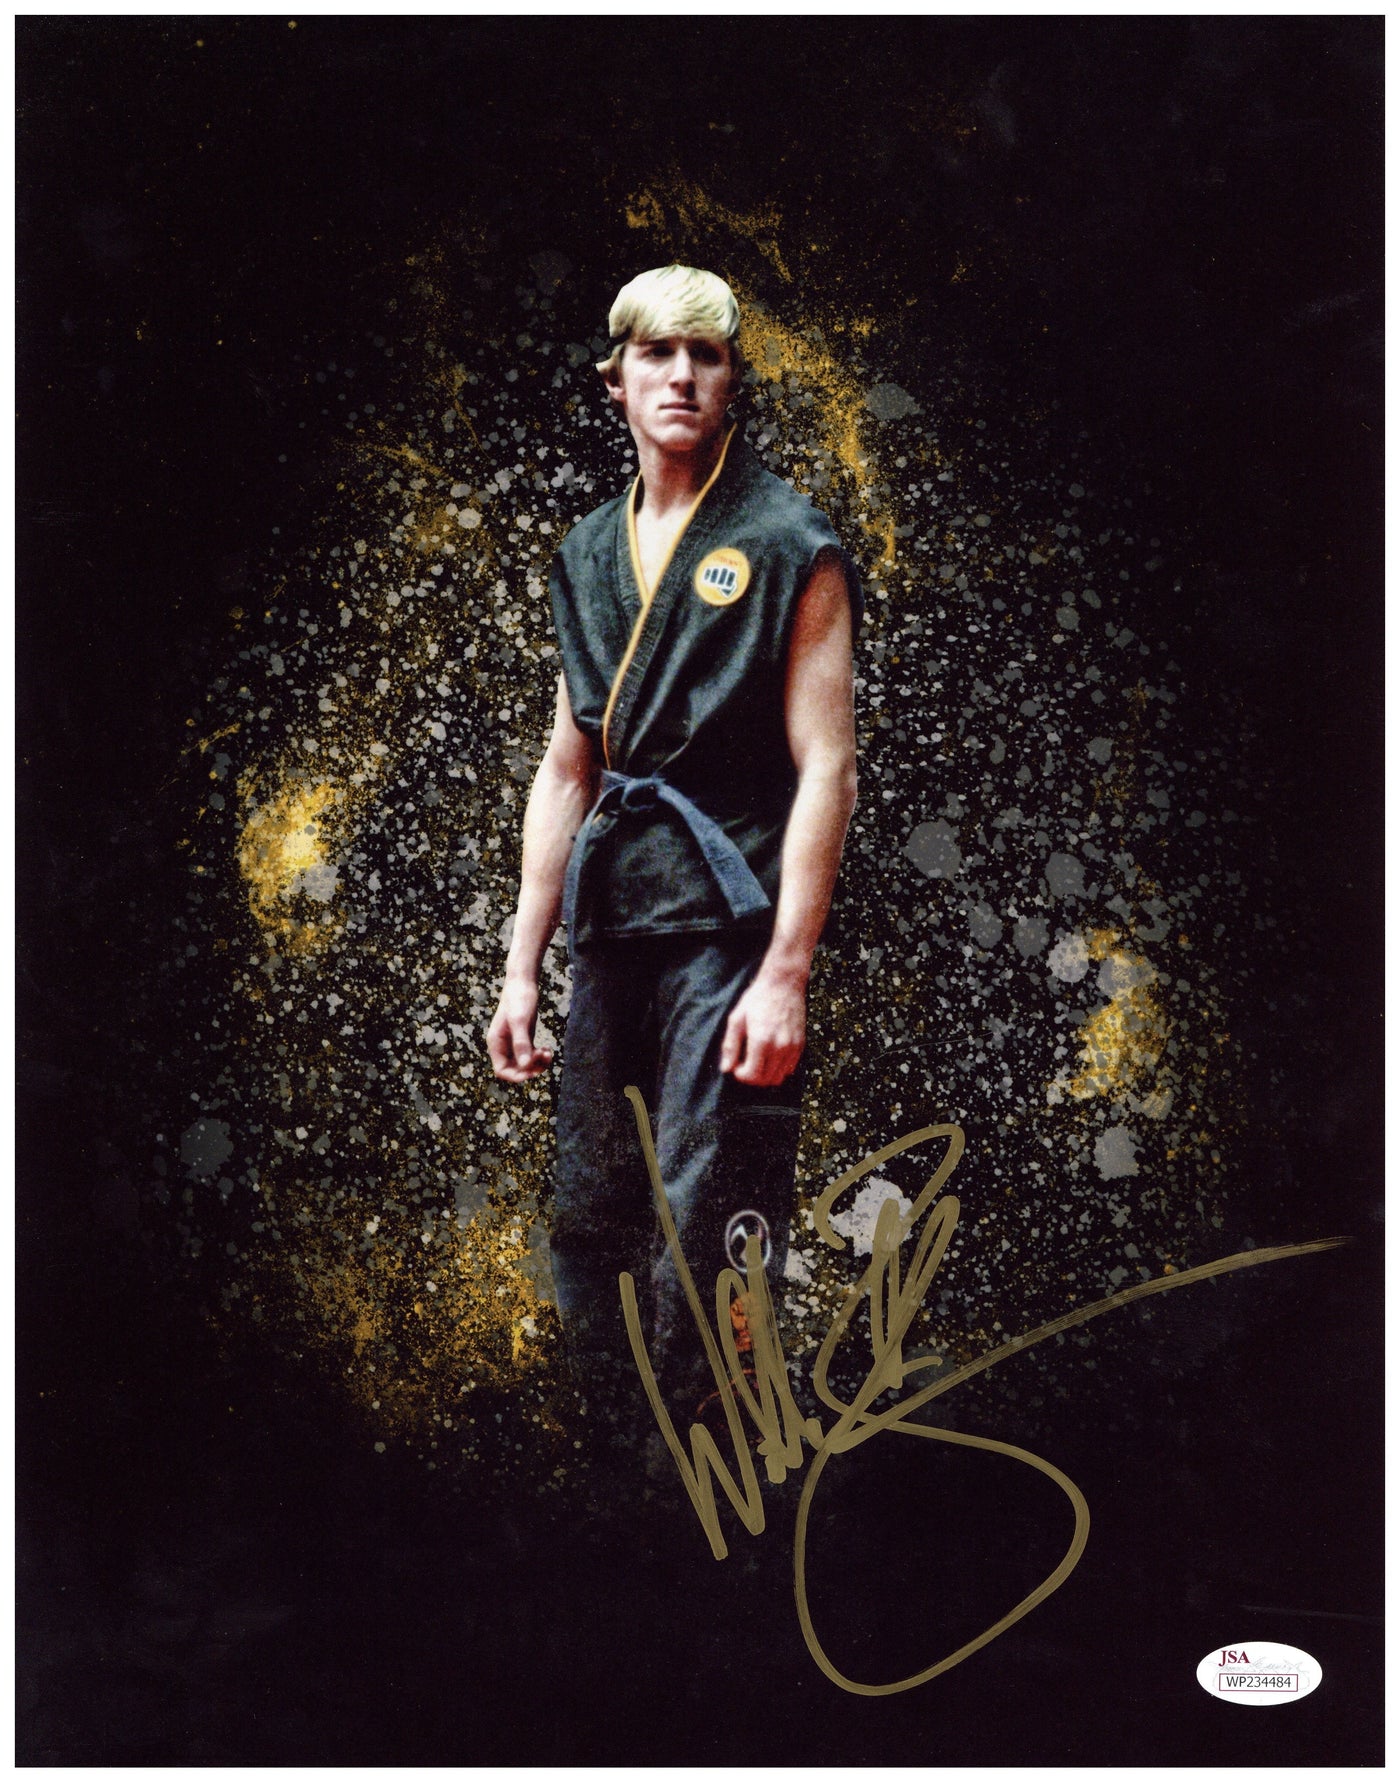 William Zabka Signed 11x14 Photo The Karate Kid Cobra Kai Autographed JSA COA